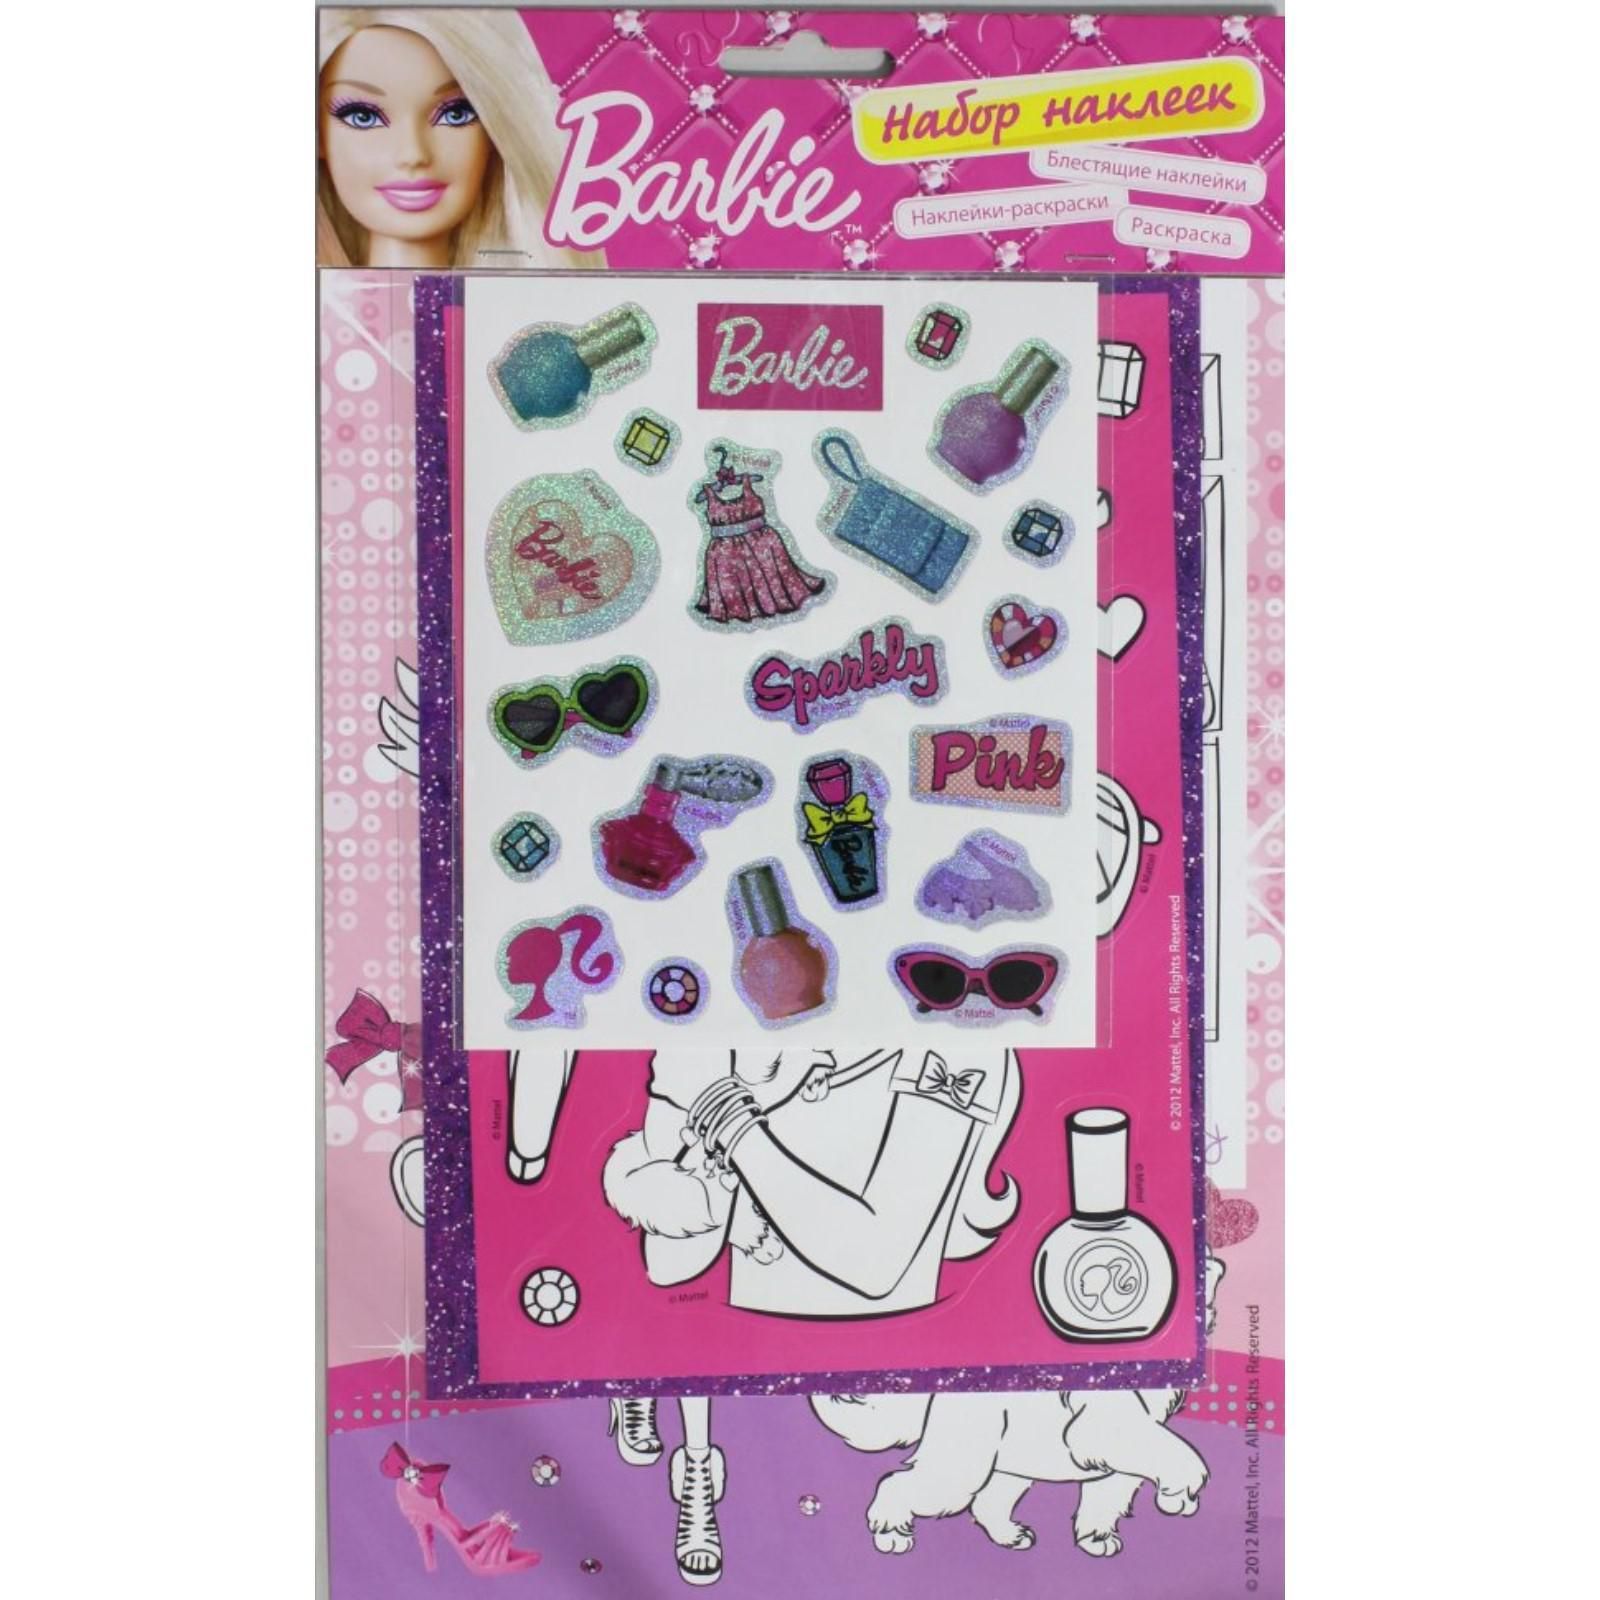 Barbie. Набор наклеек (арт. 21092)